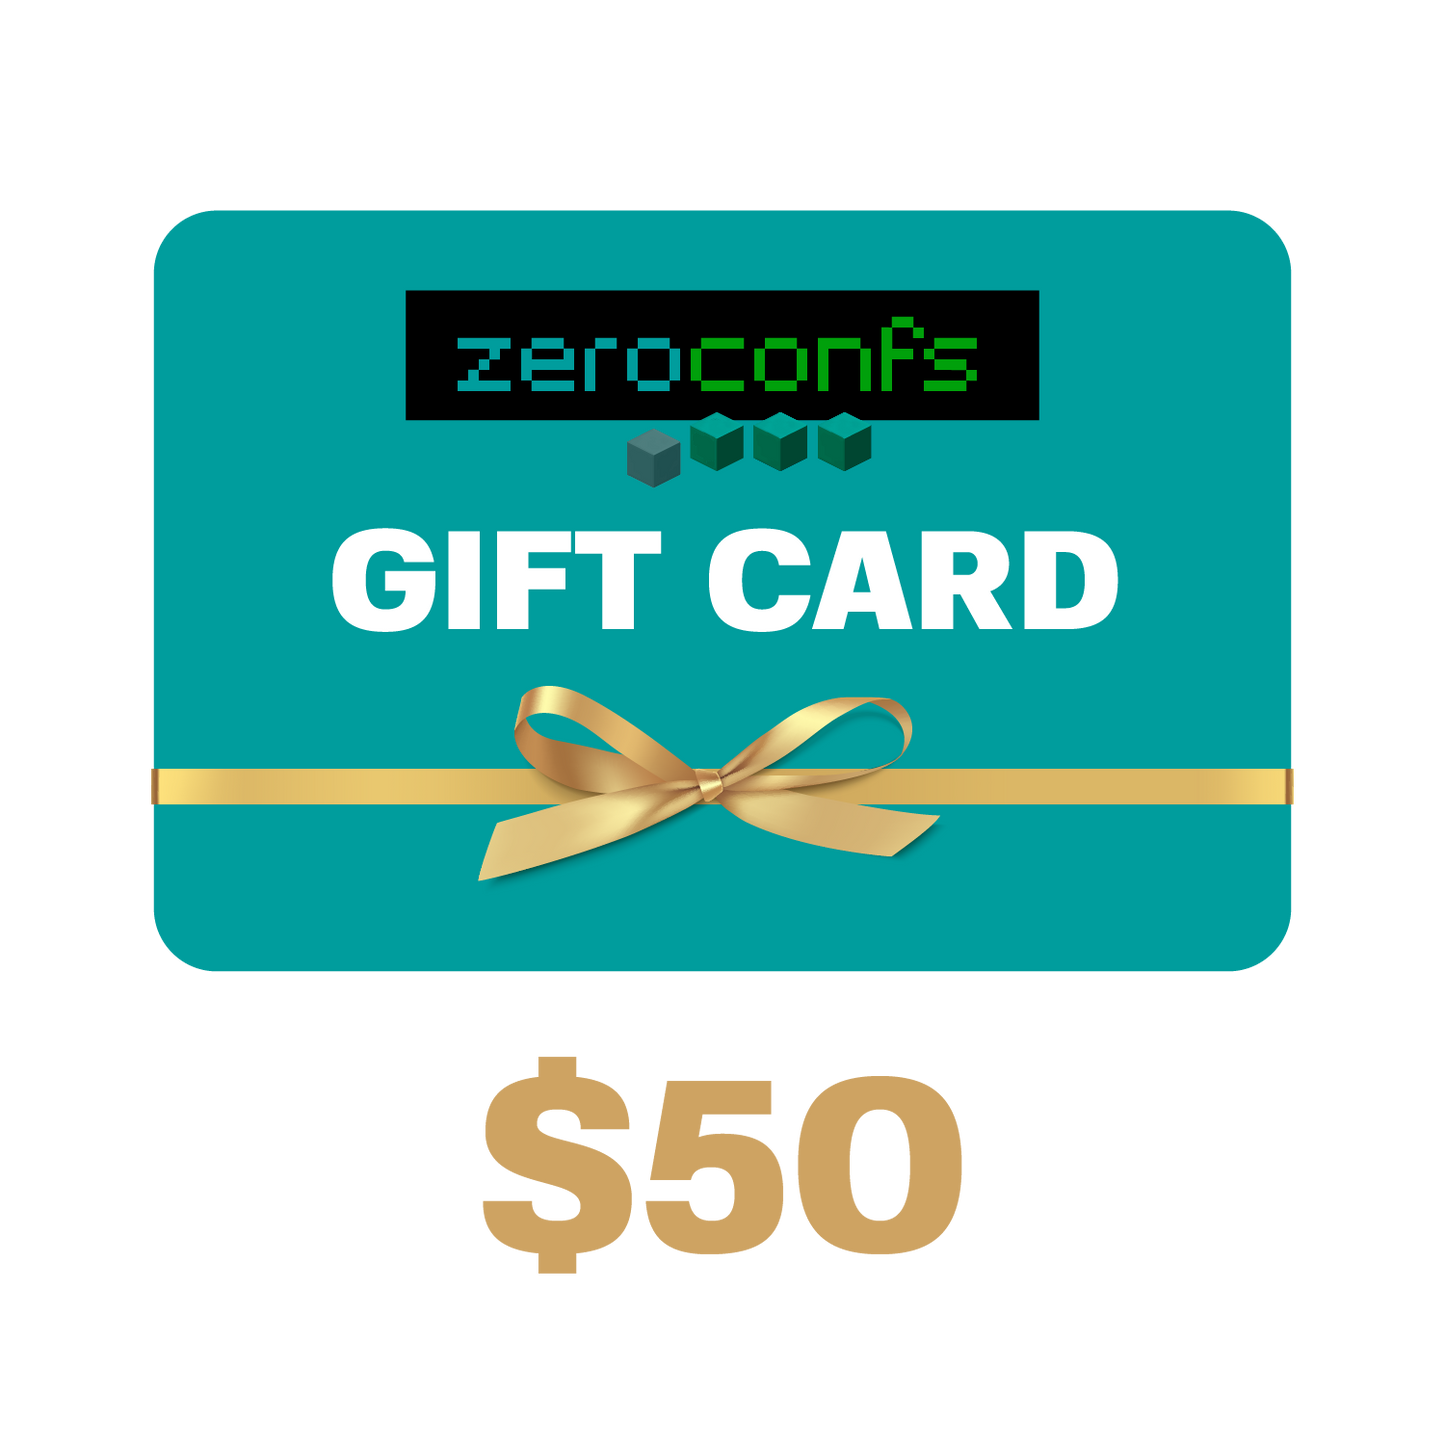 Gift Card Gift Cards zeroconfs $50 USD  